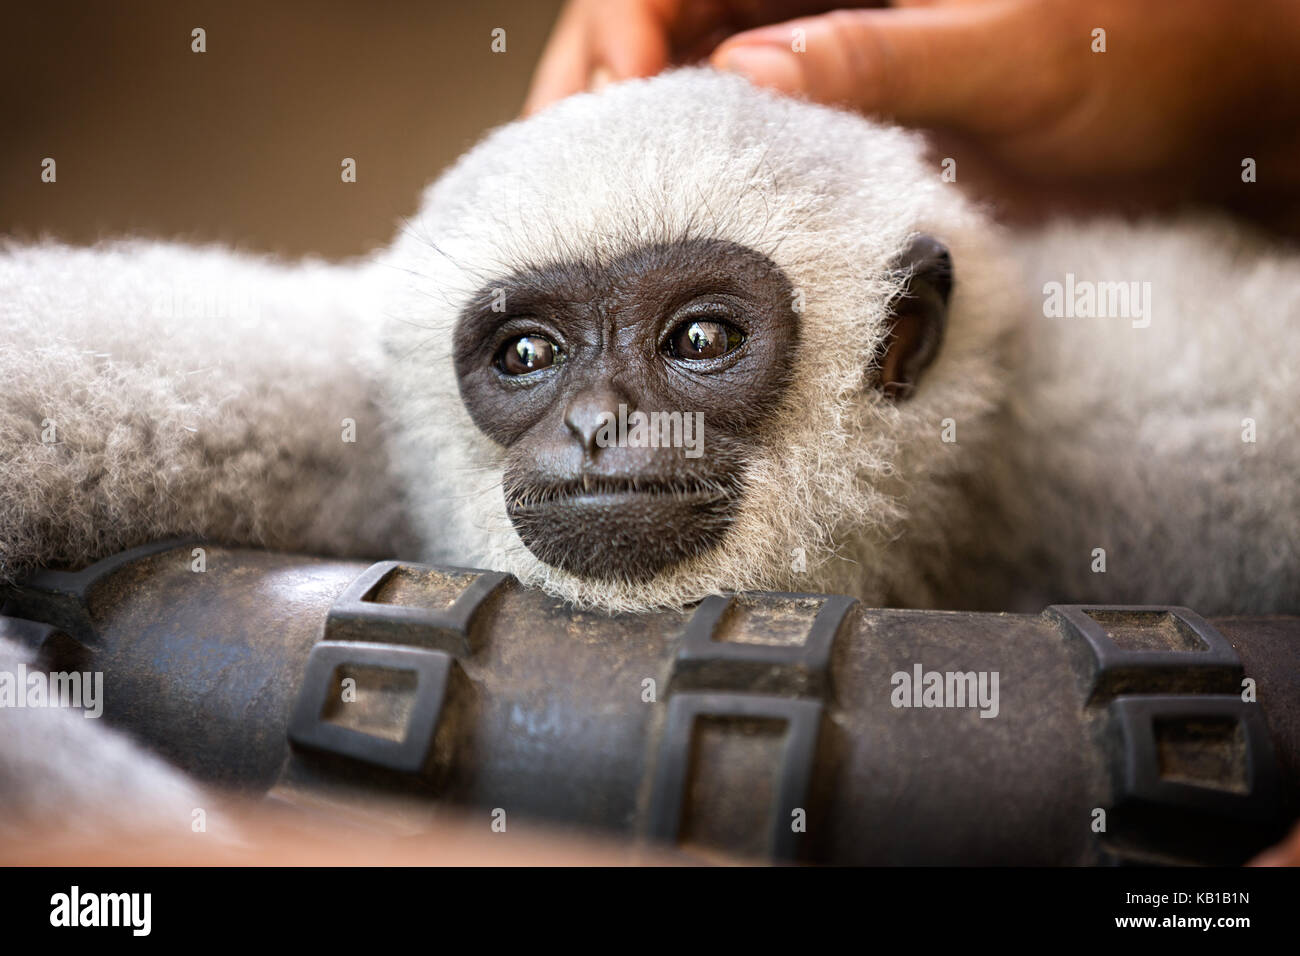 pamper monkey